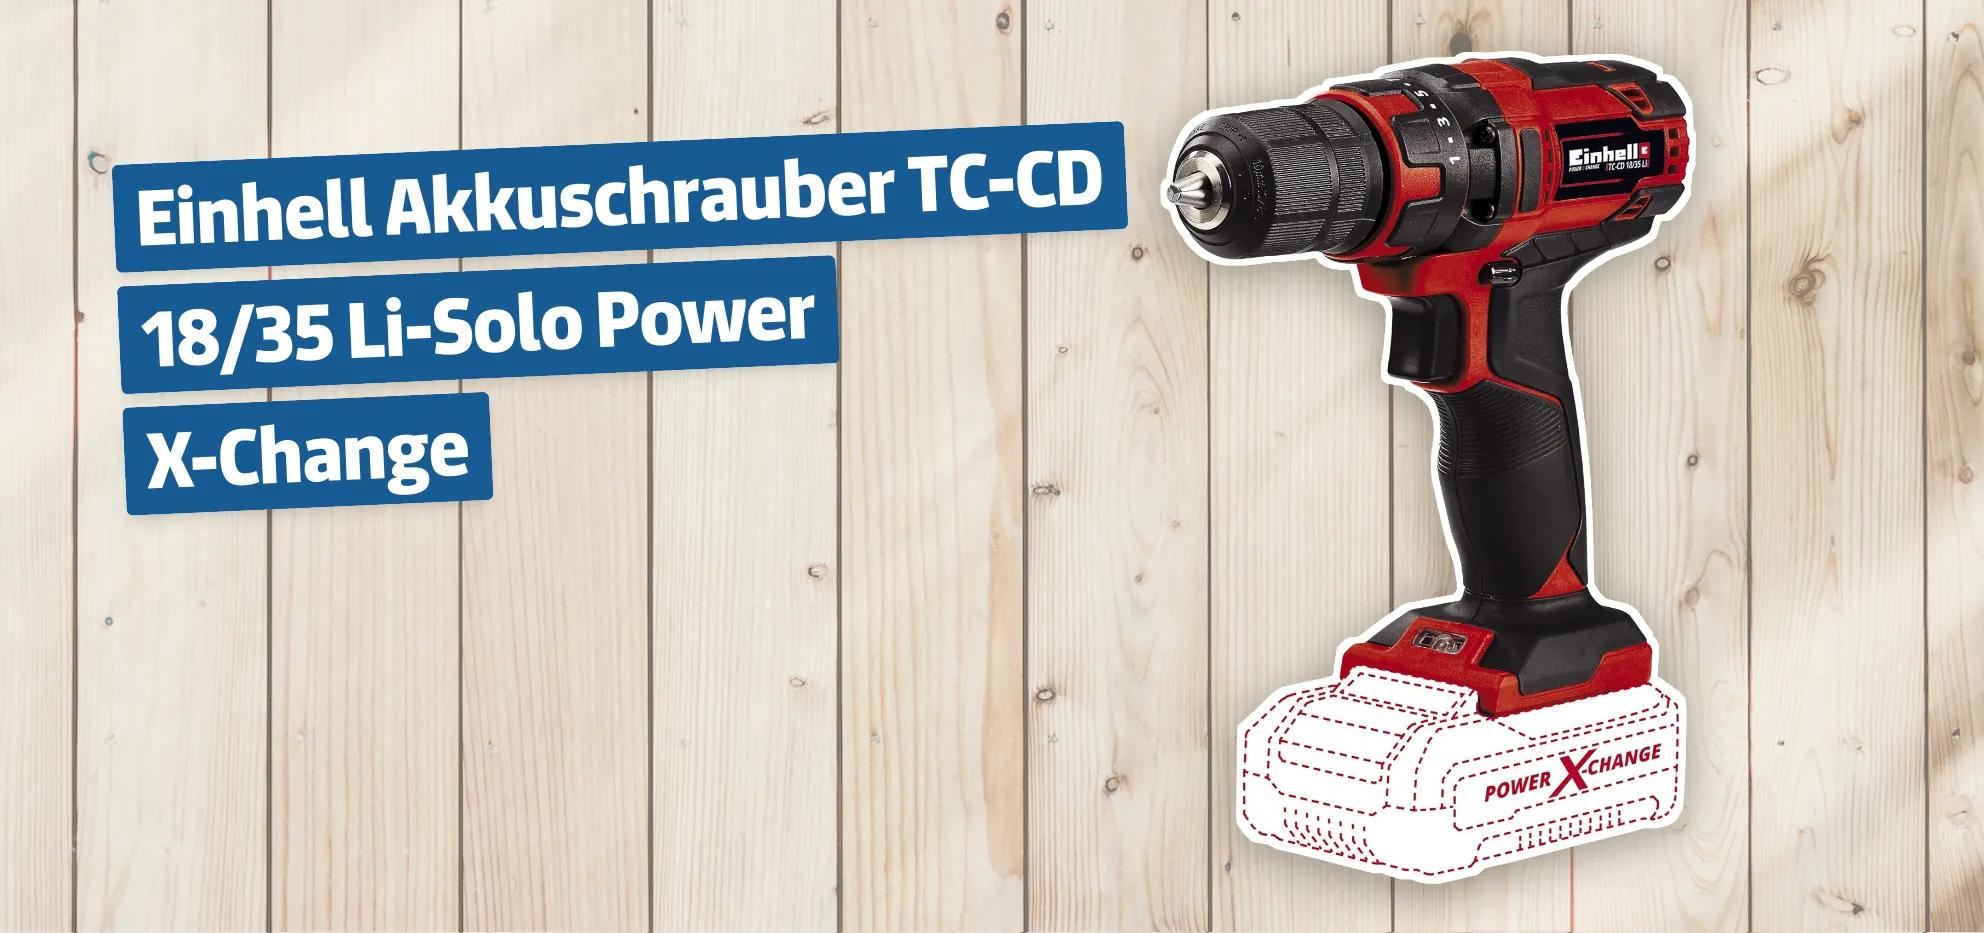 Einhell Akkuschrauber TC-CD 18/35 Li-Solo Power X-Change